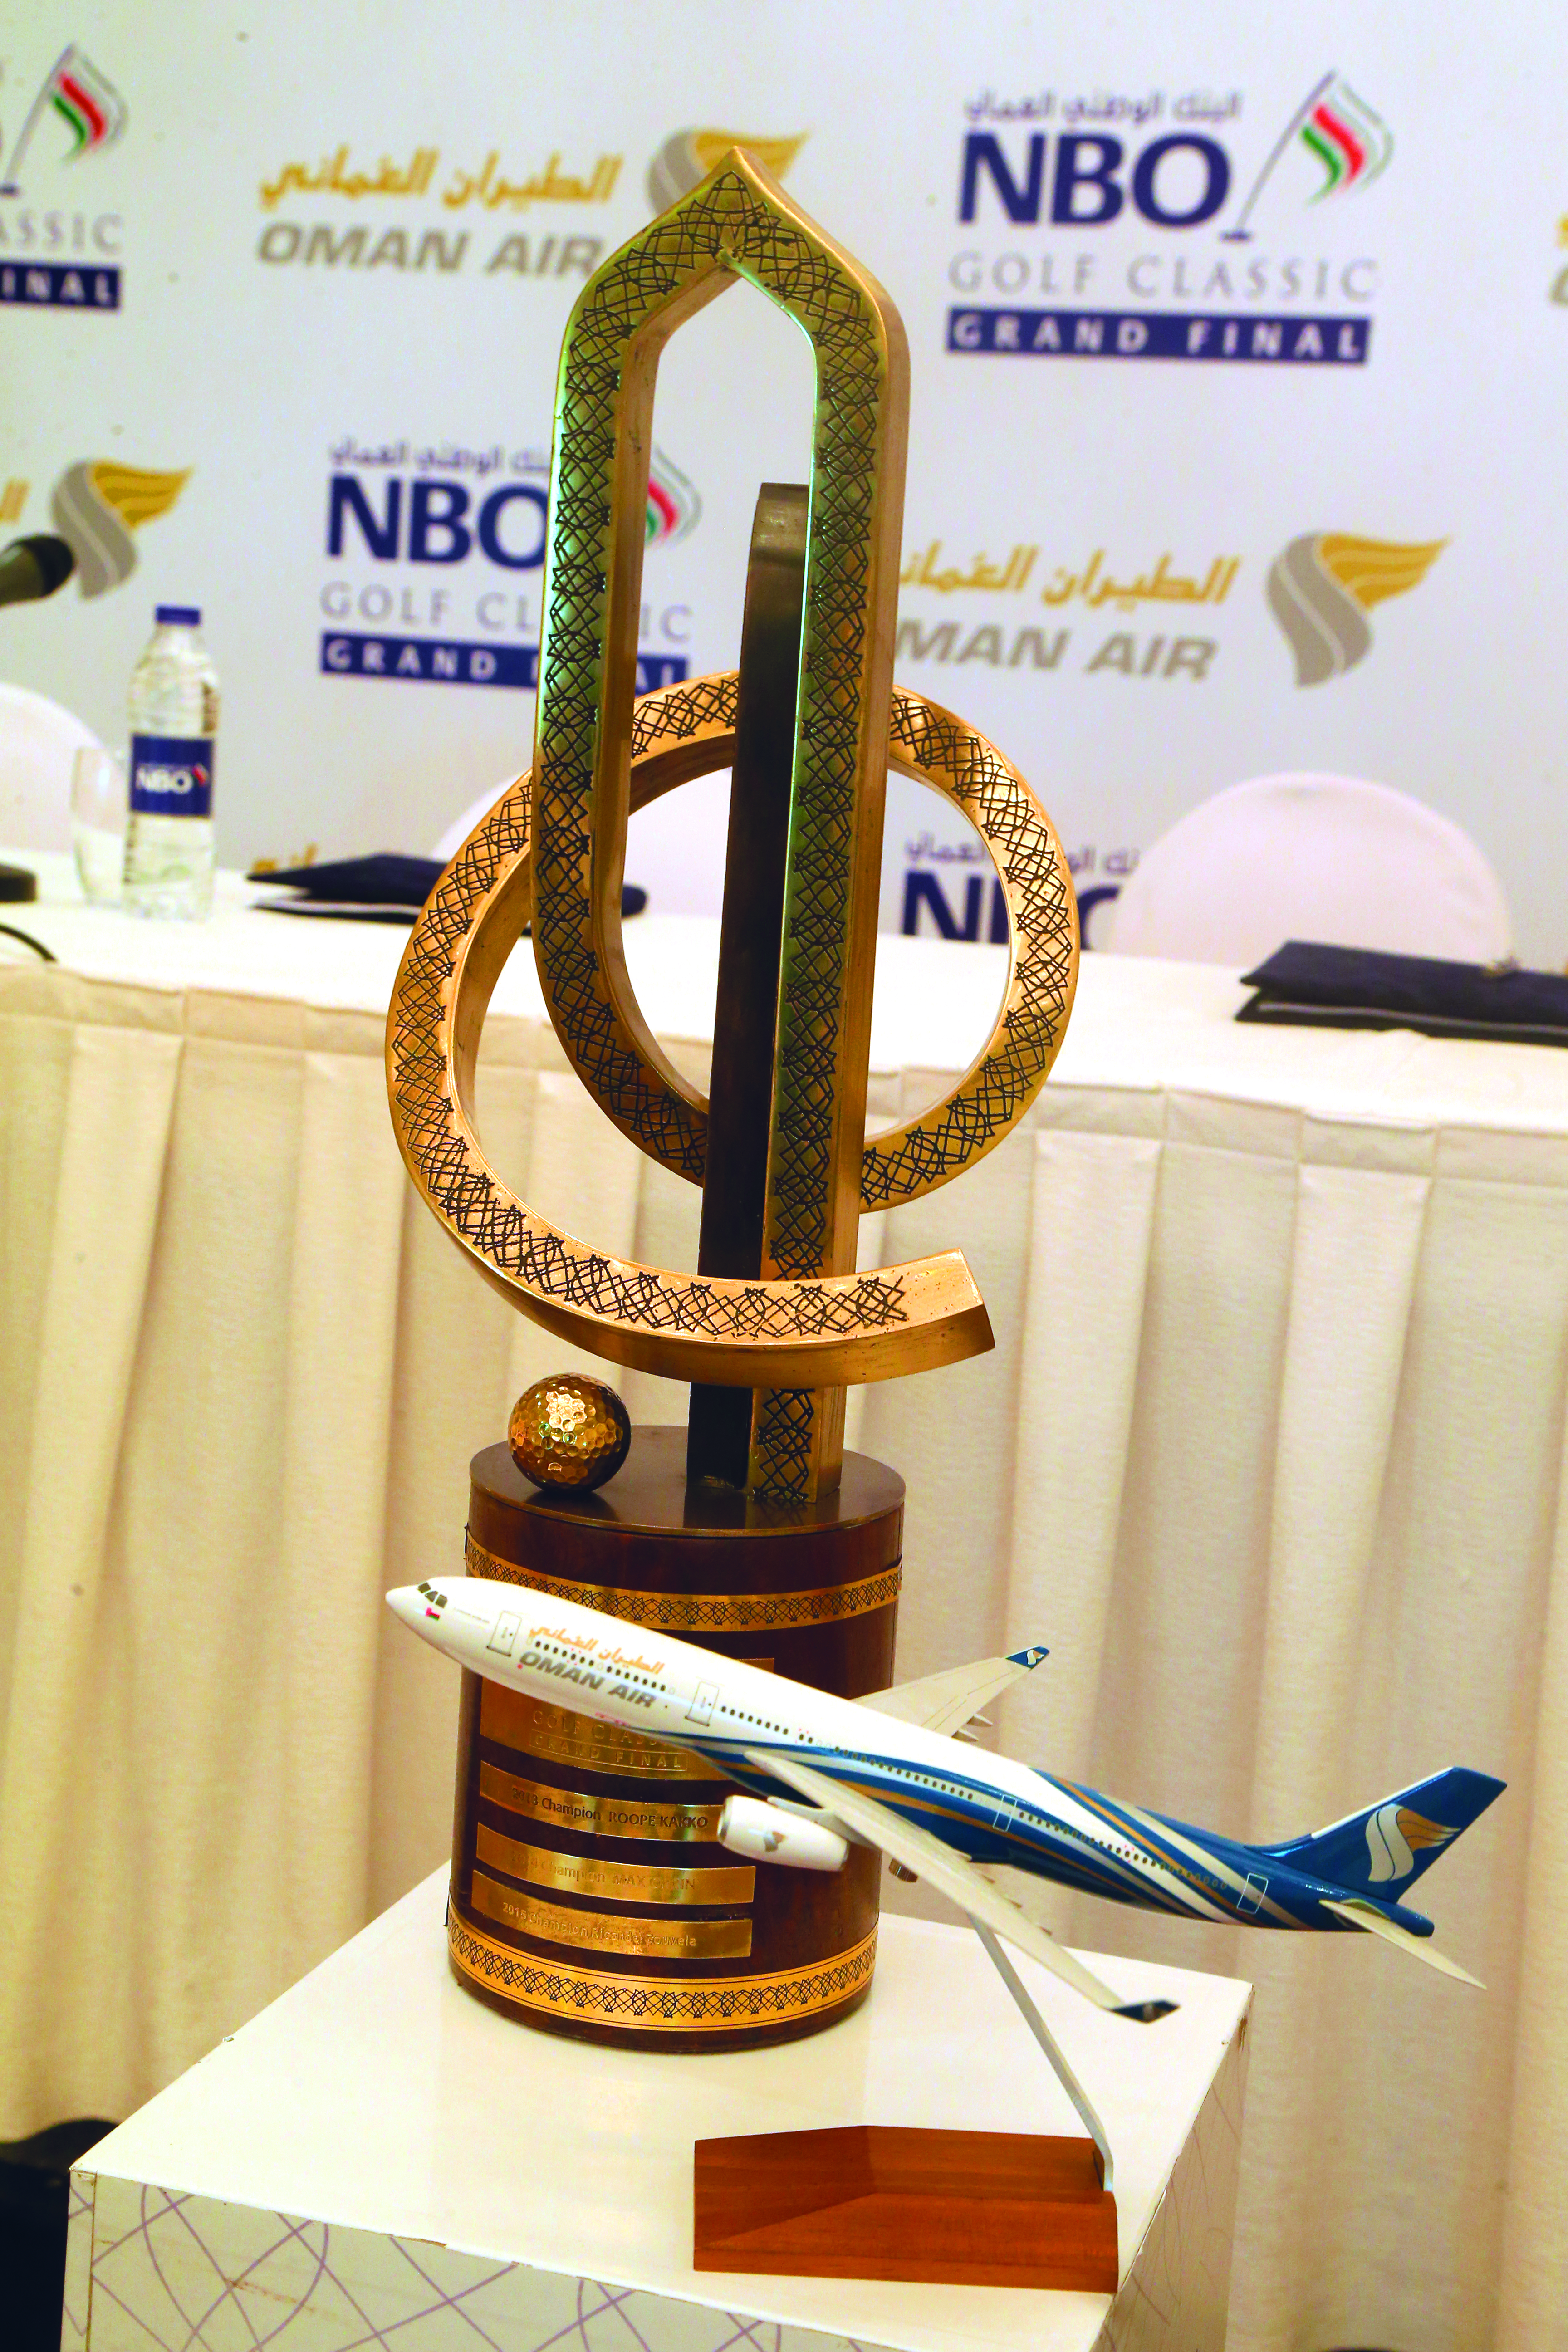 Oman Air renews sponsorship of NBO Golf Classic Grand Final